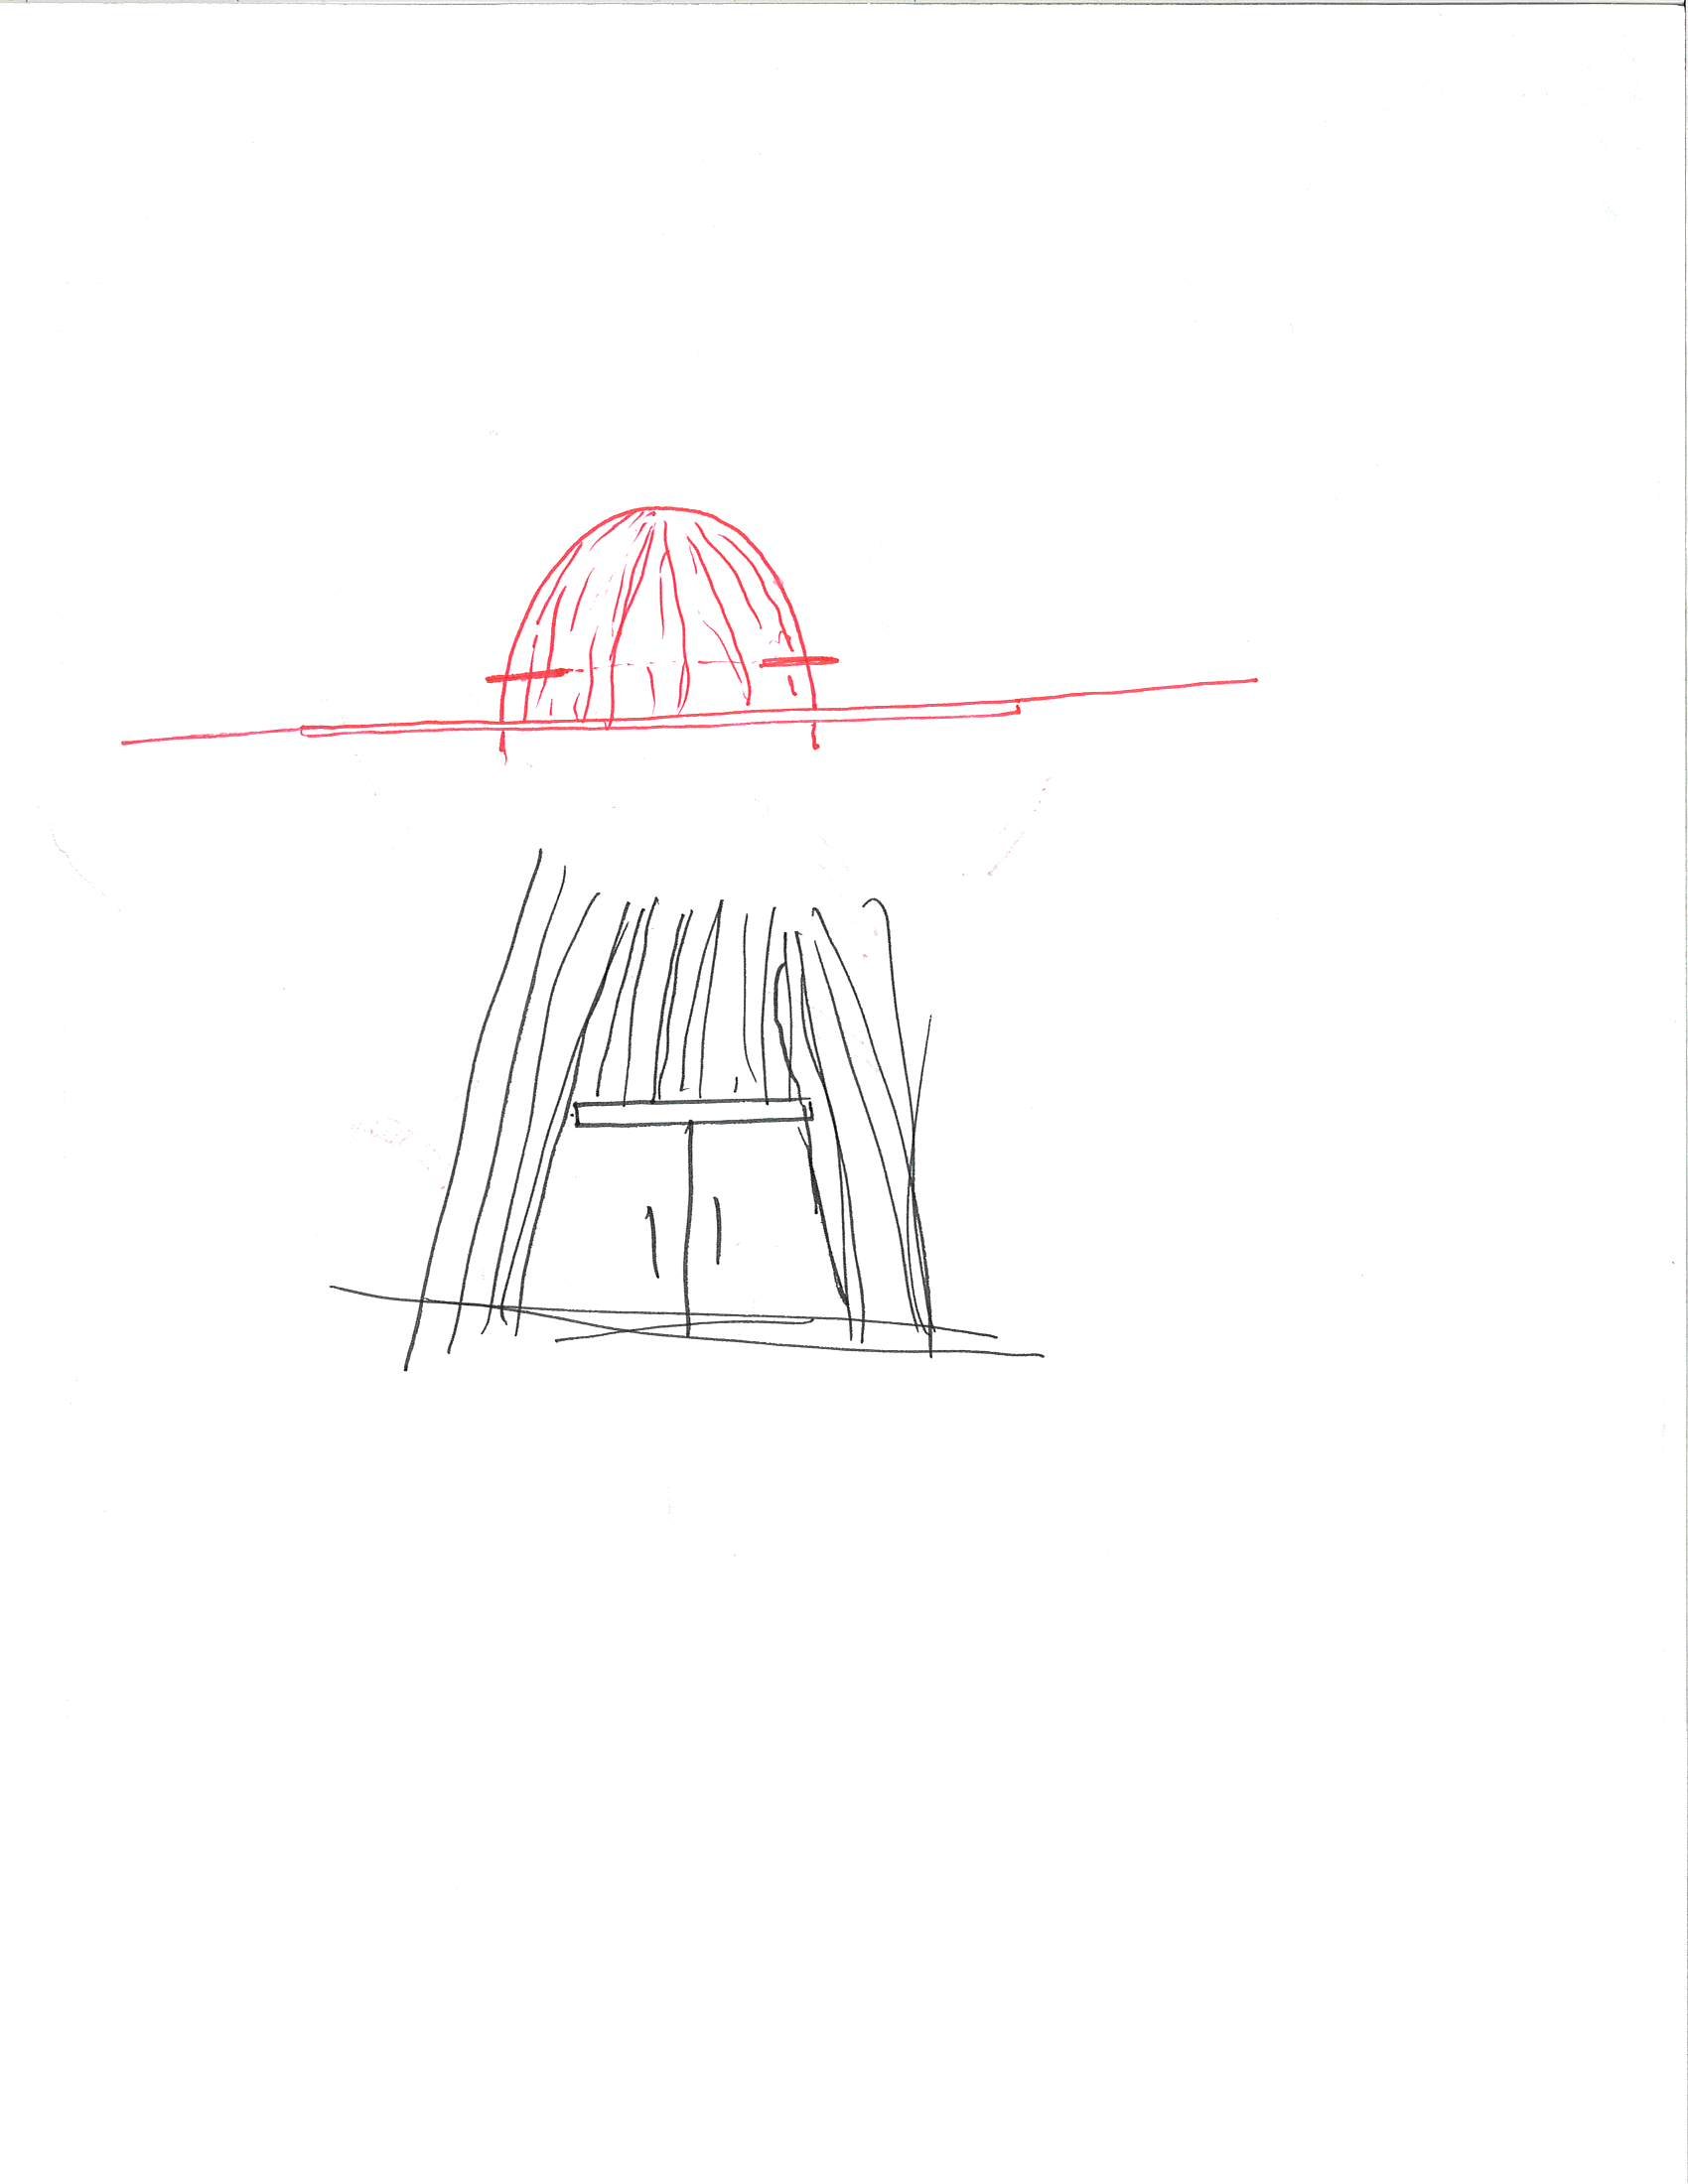 2017-02-01 Raised Mezzanine Sketch.jpg